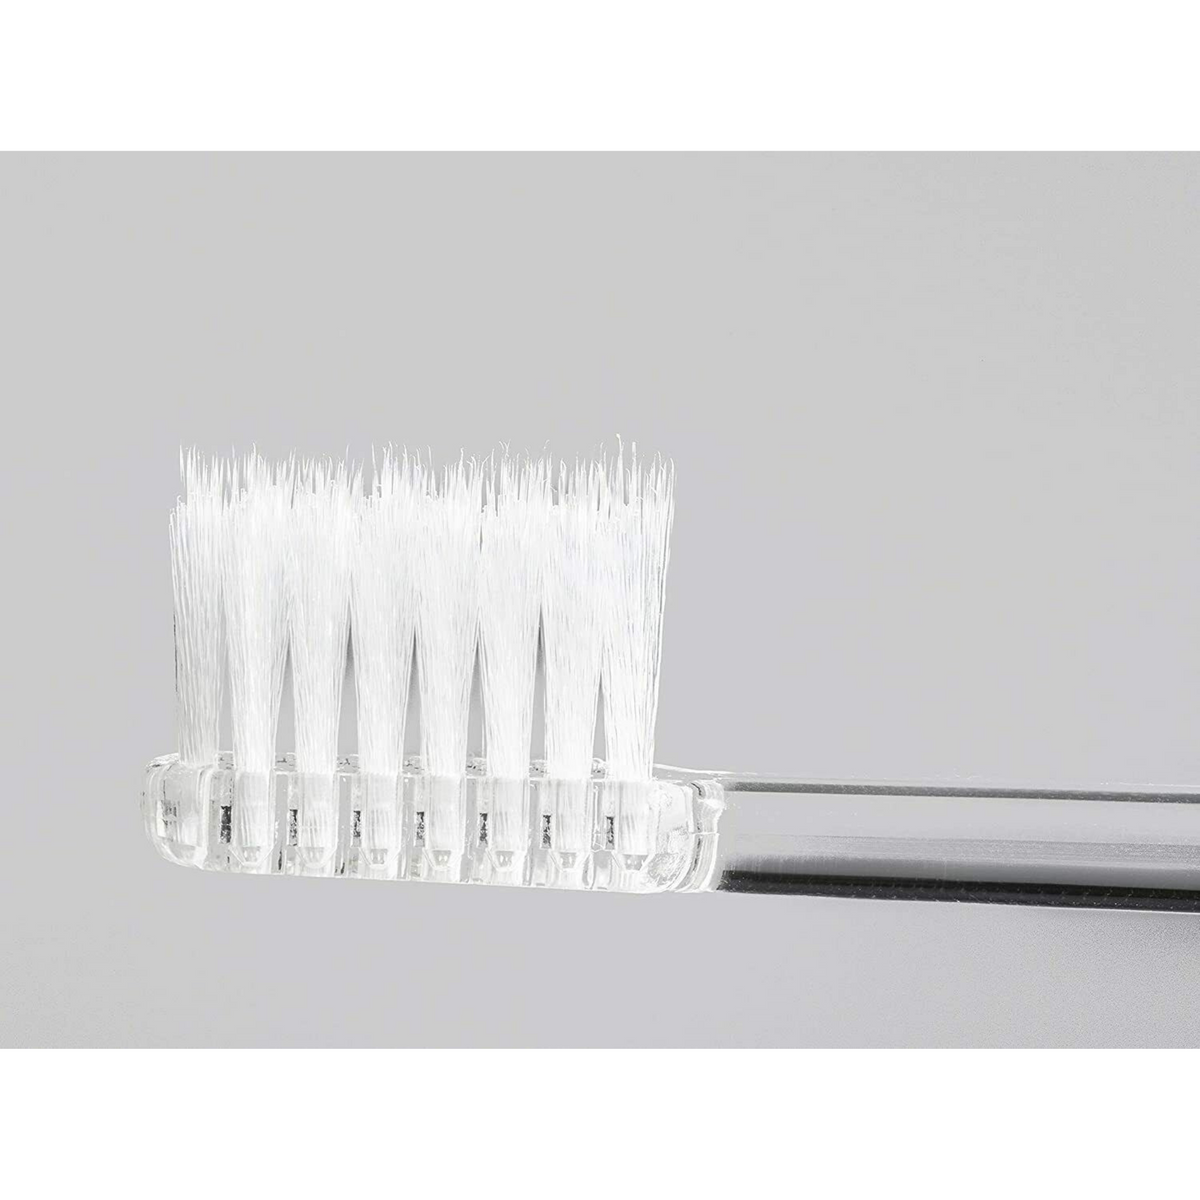 Hamico Toothbrush - Fringe Toothbrush#10085015